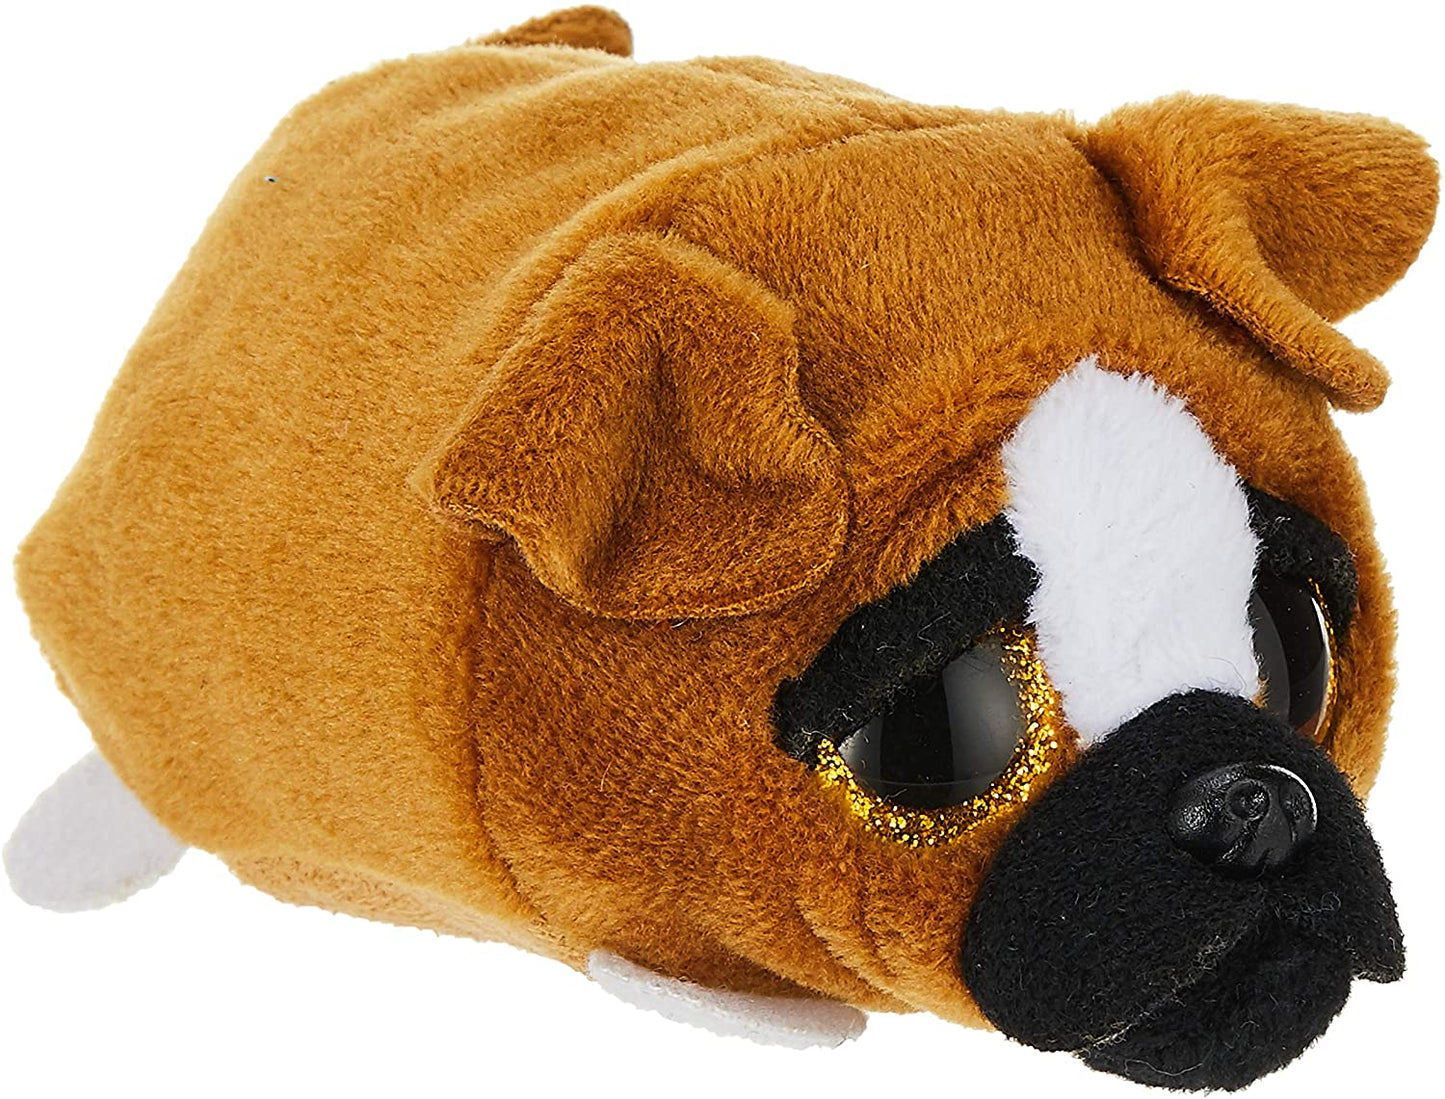 Diggs Dog - Teeny Tys 4 Inch Stuffed Animal - Plush